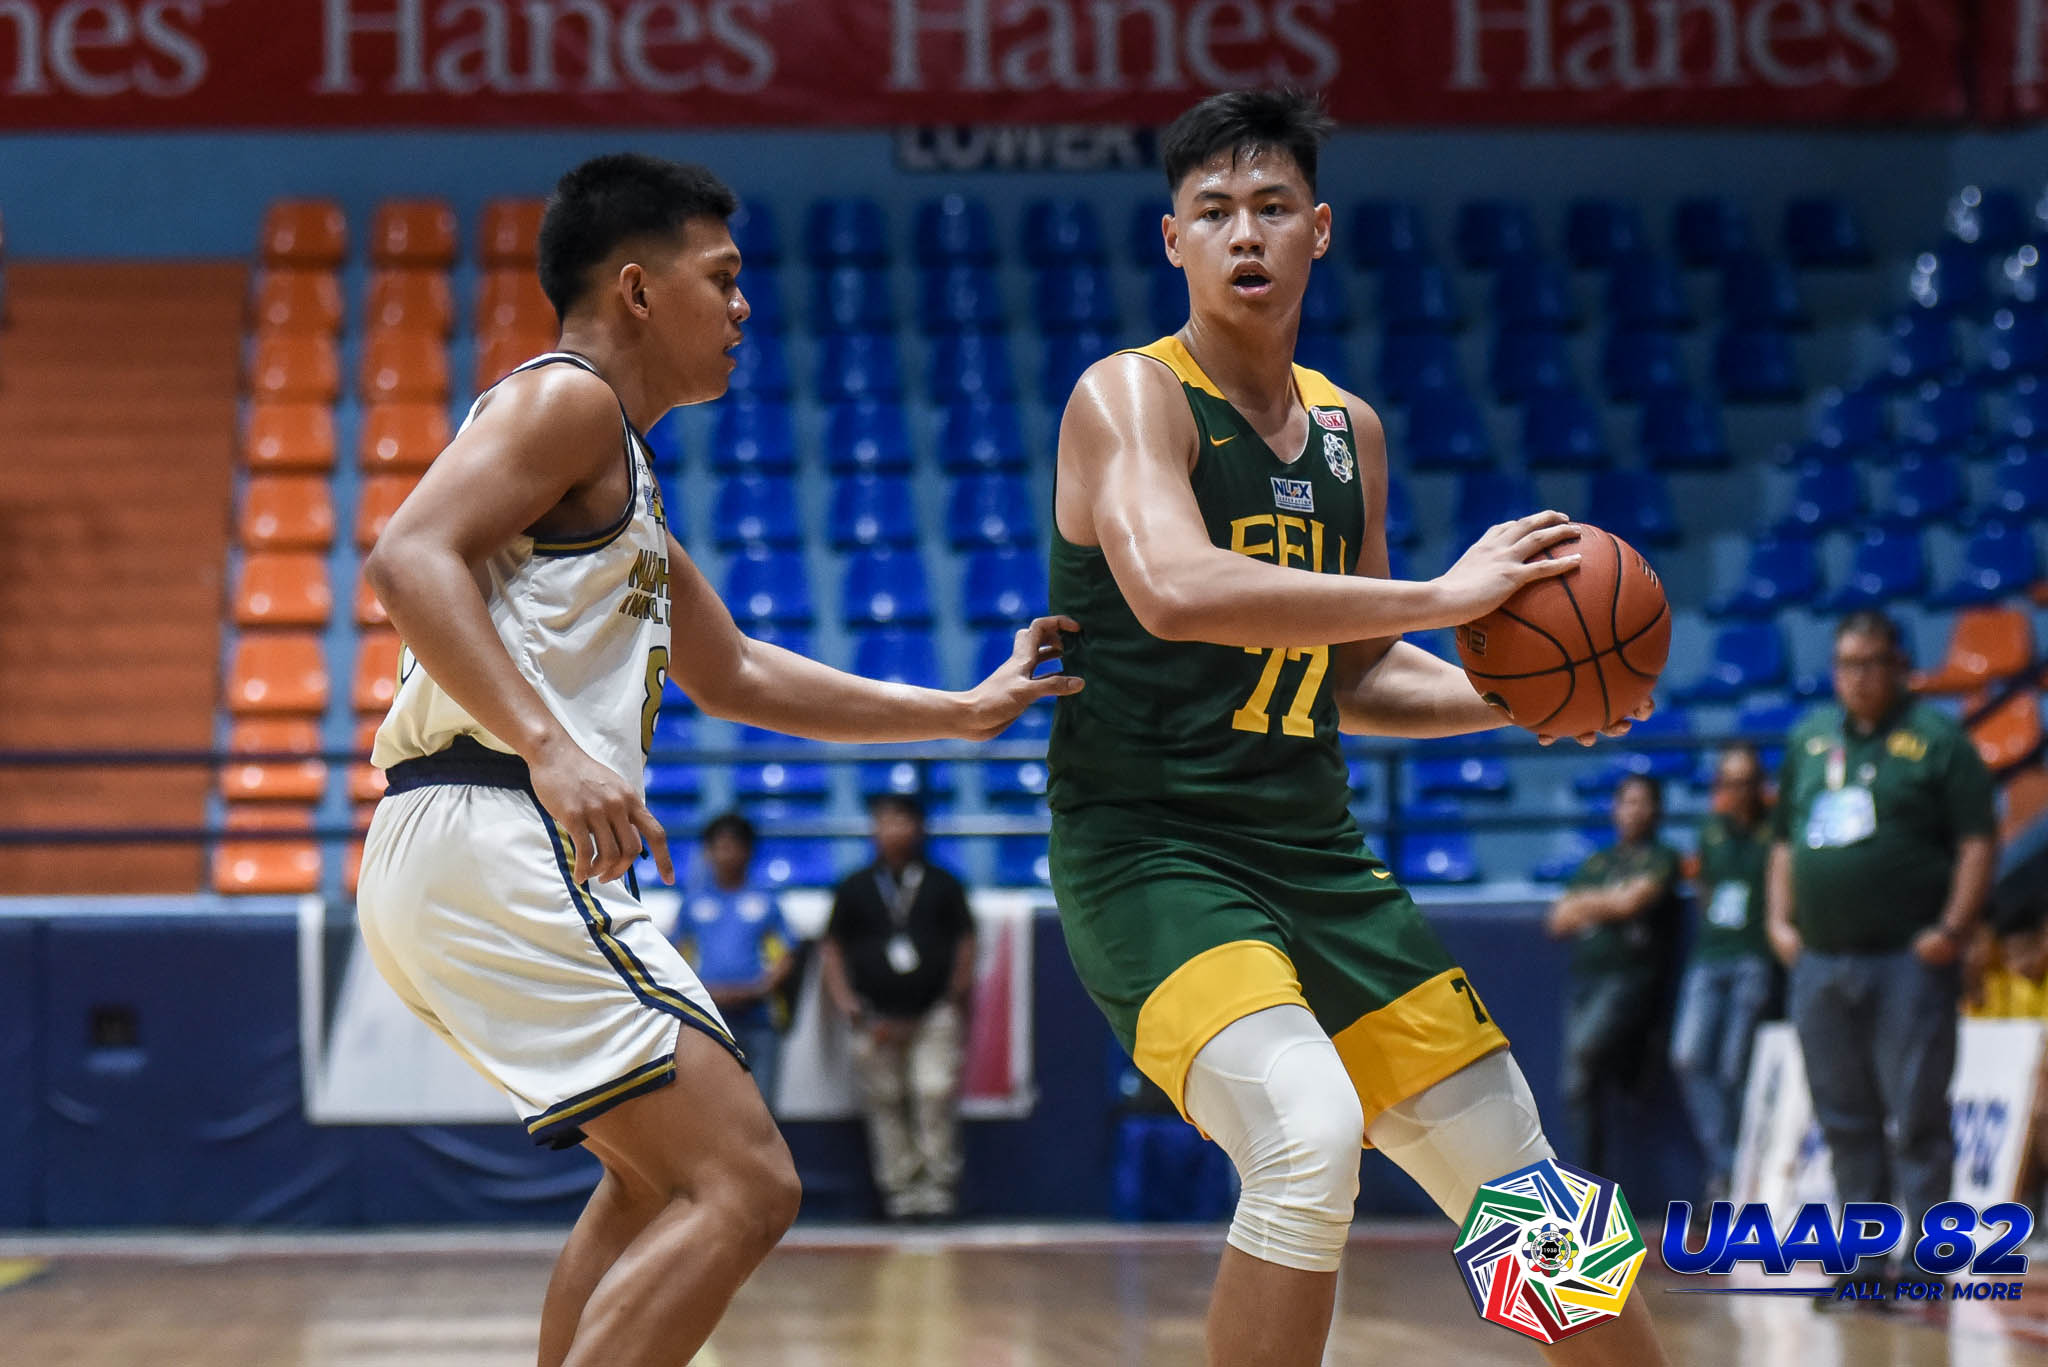 UAAP82-BOYS-BB-FINALS-G2-2ND-PHOTO-FEU-PADRONES Donn Lim transfers to NU as Kenshin Pedrones makes Bulldogs return Basketball News NU UAAP  - philippine sports news